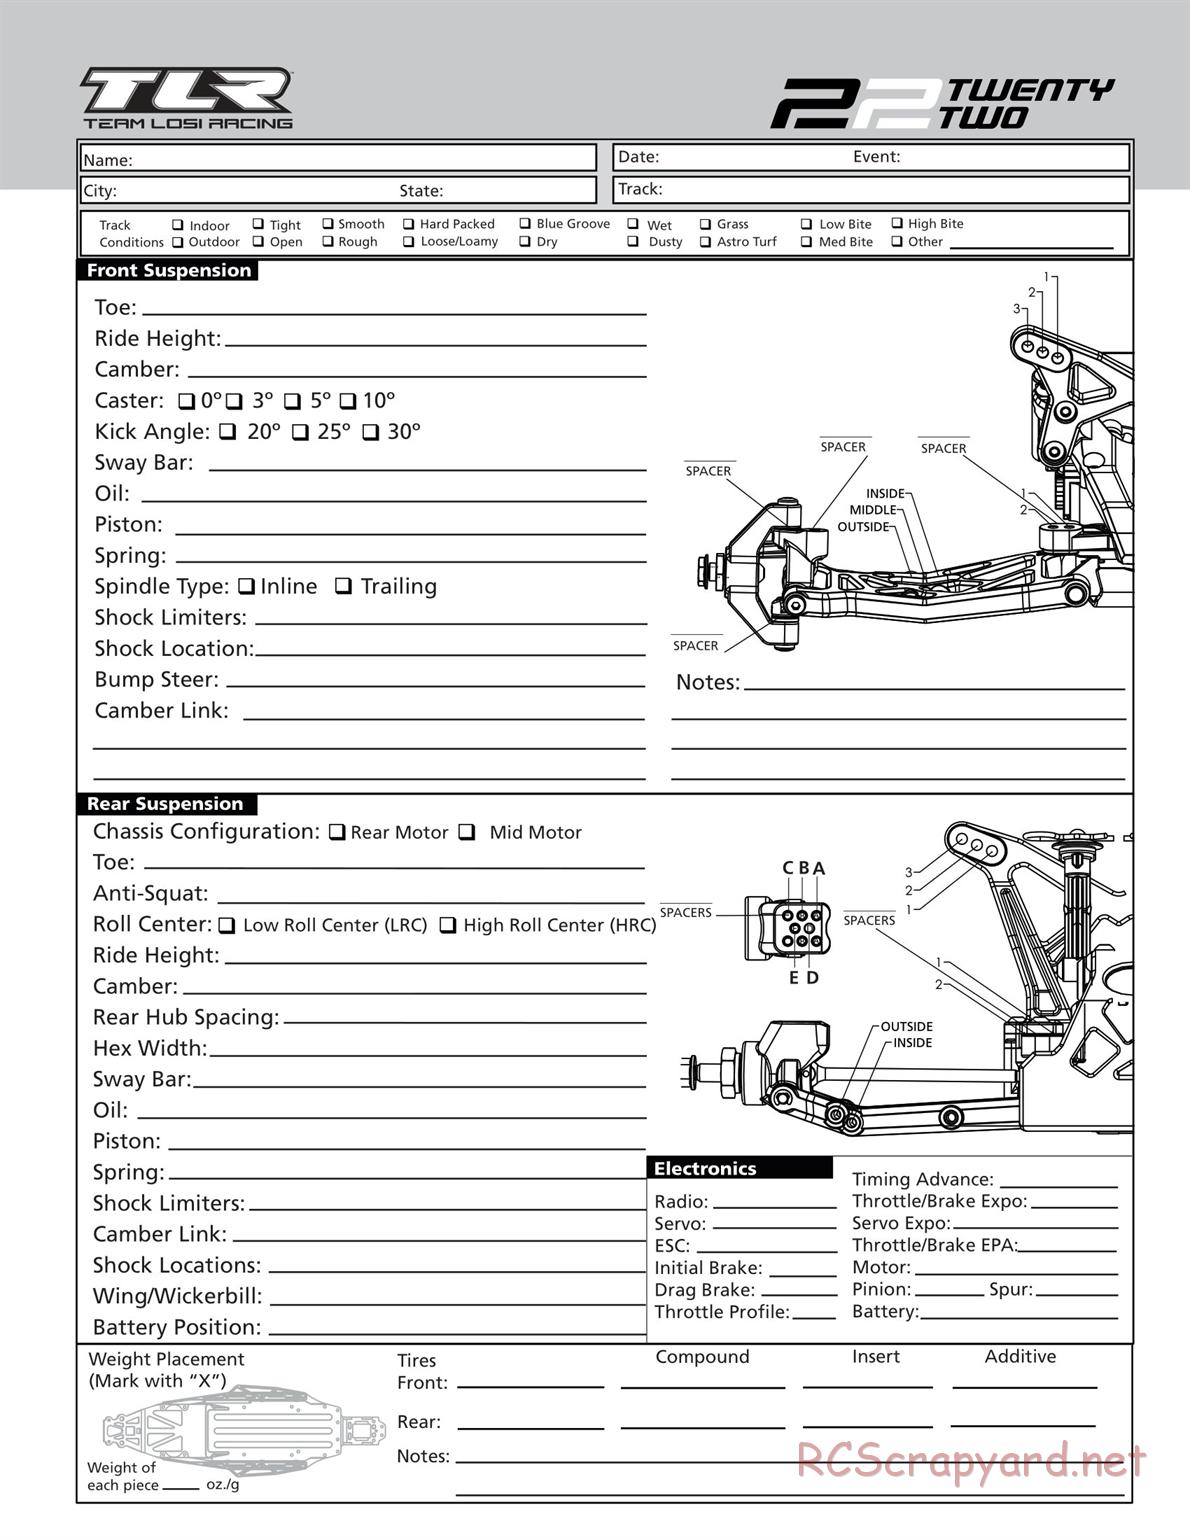 Team Losi - TLR 22 TwentyTwo - Manual - Page 45